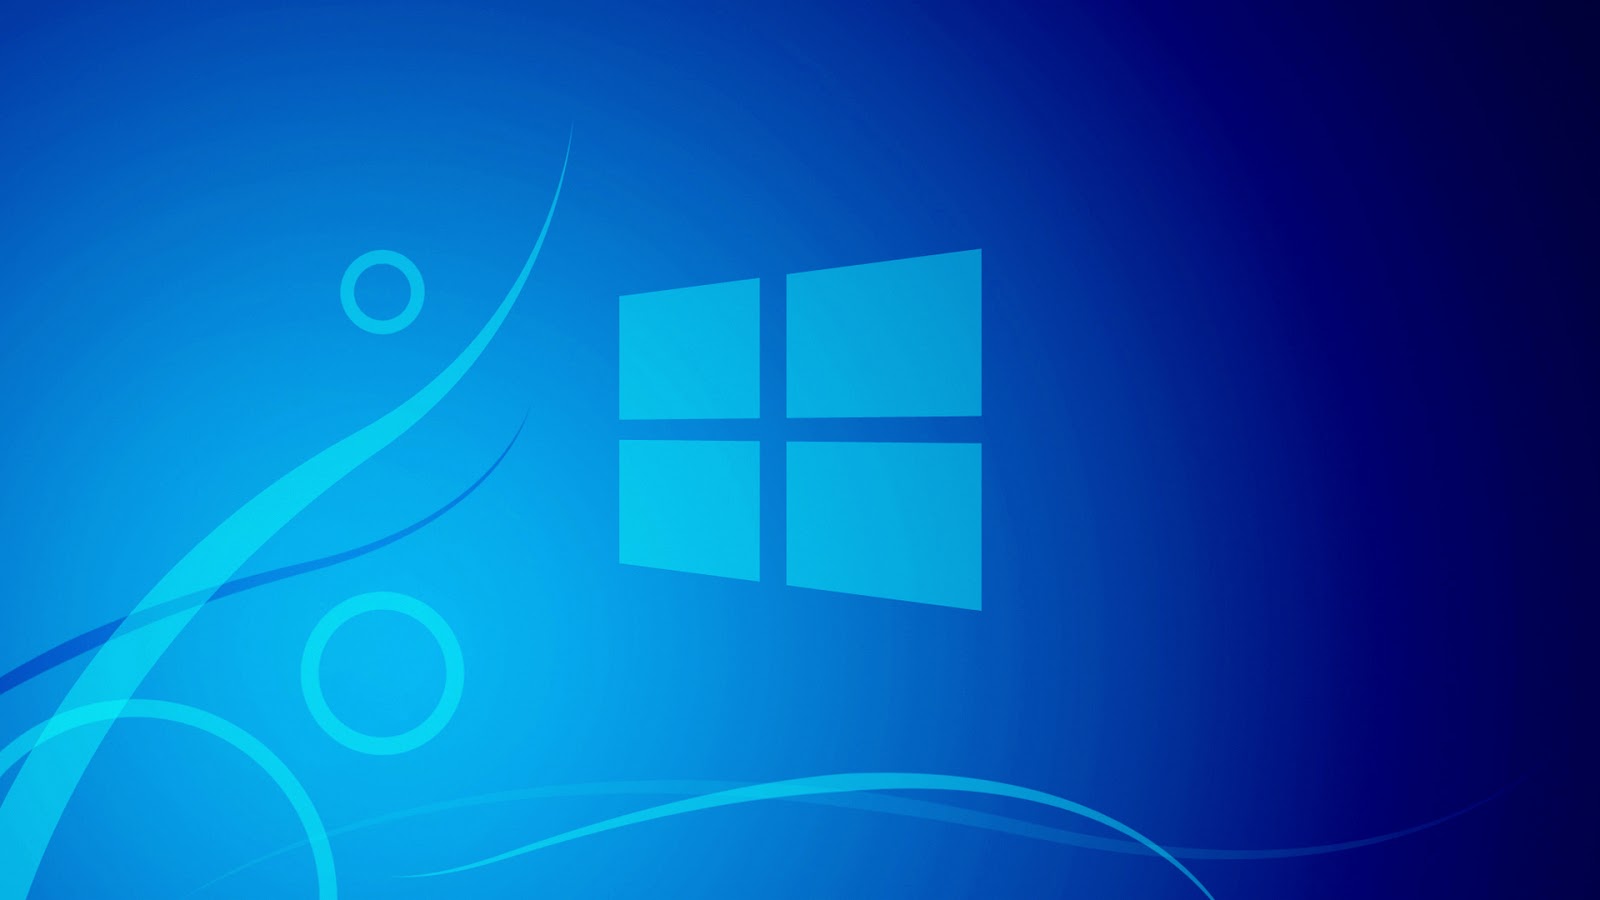 Windows 8 wallpaper hd 1080p free download